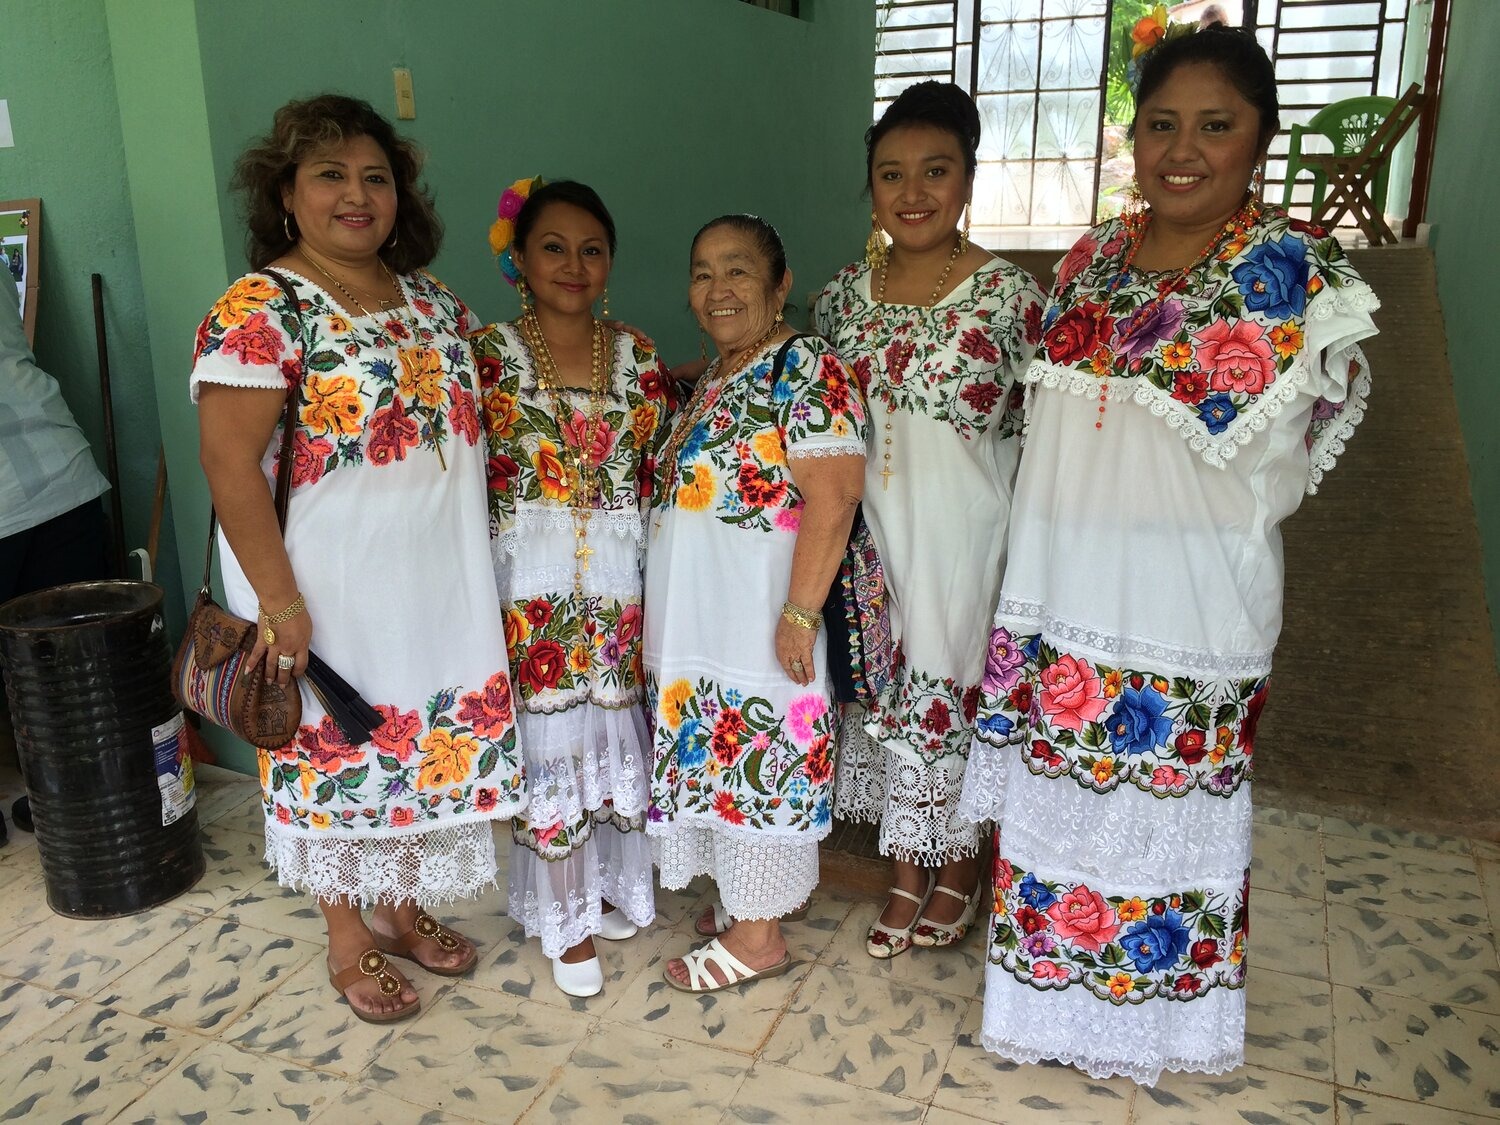  - Yucatec Maya women with traditional dress in Valladolid, Yucatan, Mexico. (Photo Credit: Russ Bodnar)